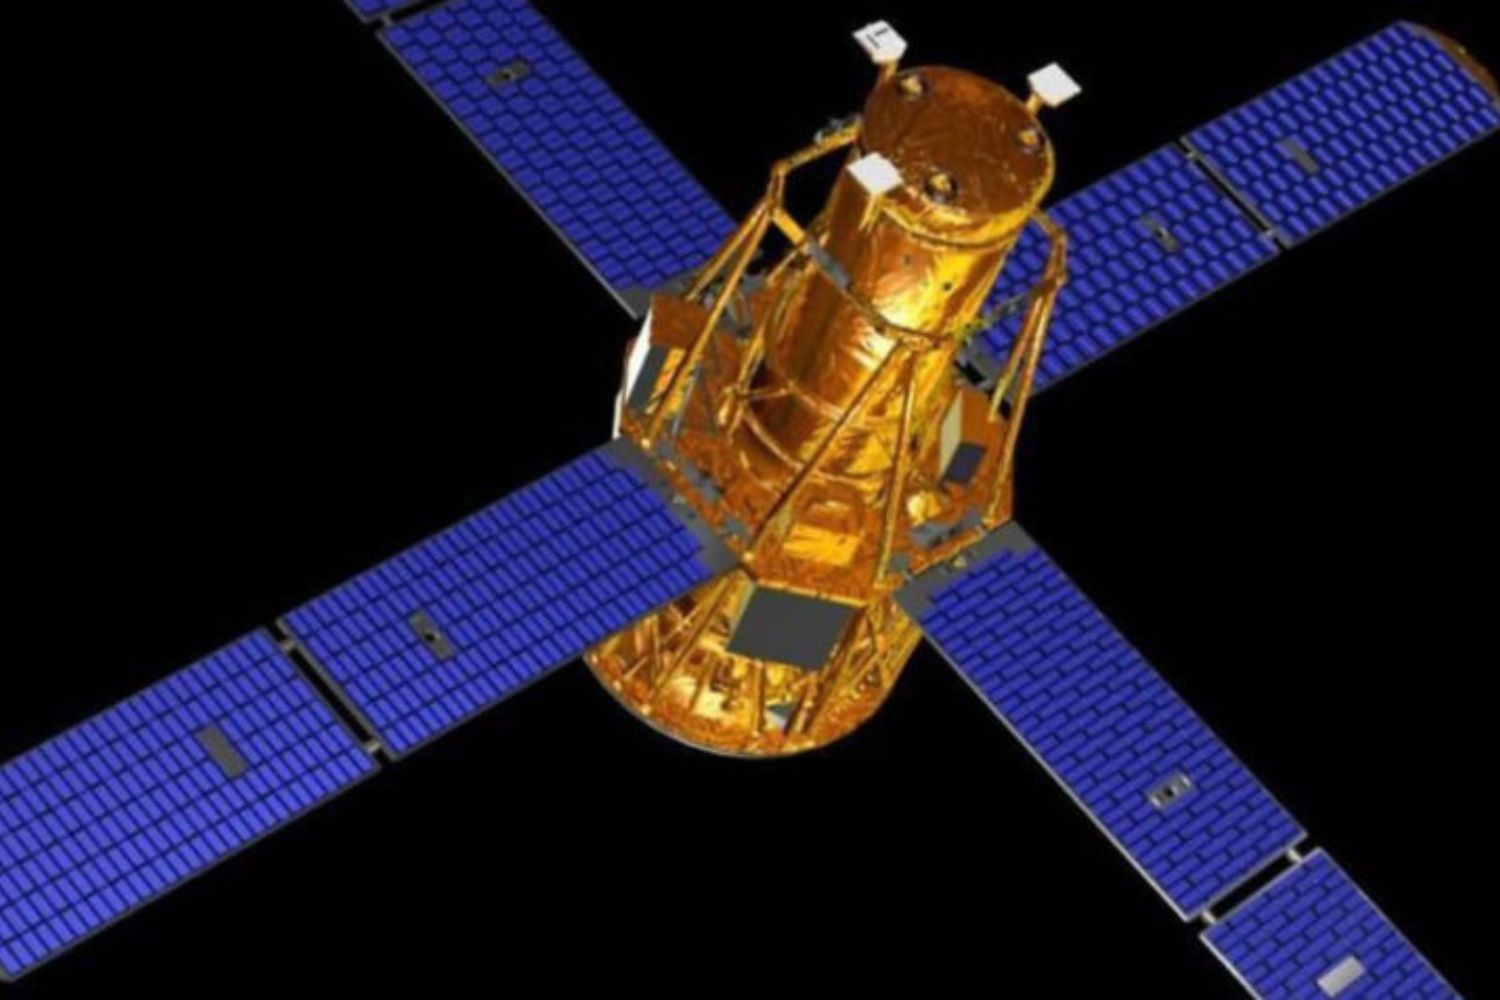 Спутник стар. RHESSI космический аппарат. Космический Спутник НАСА. Спутник NASA Reuven ramaty High Energy Solar spectroscopic Imager. Космический аппарат NASA Clementine.